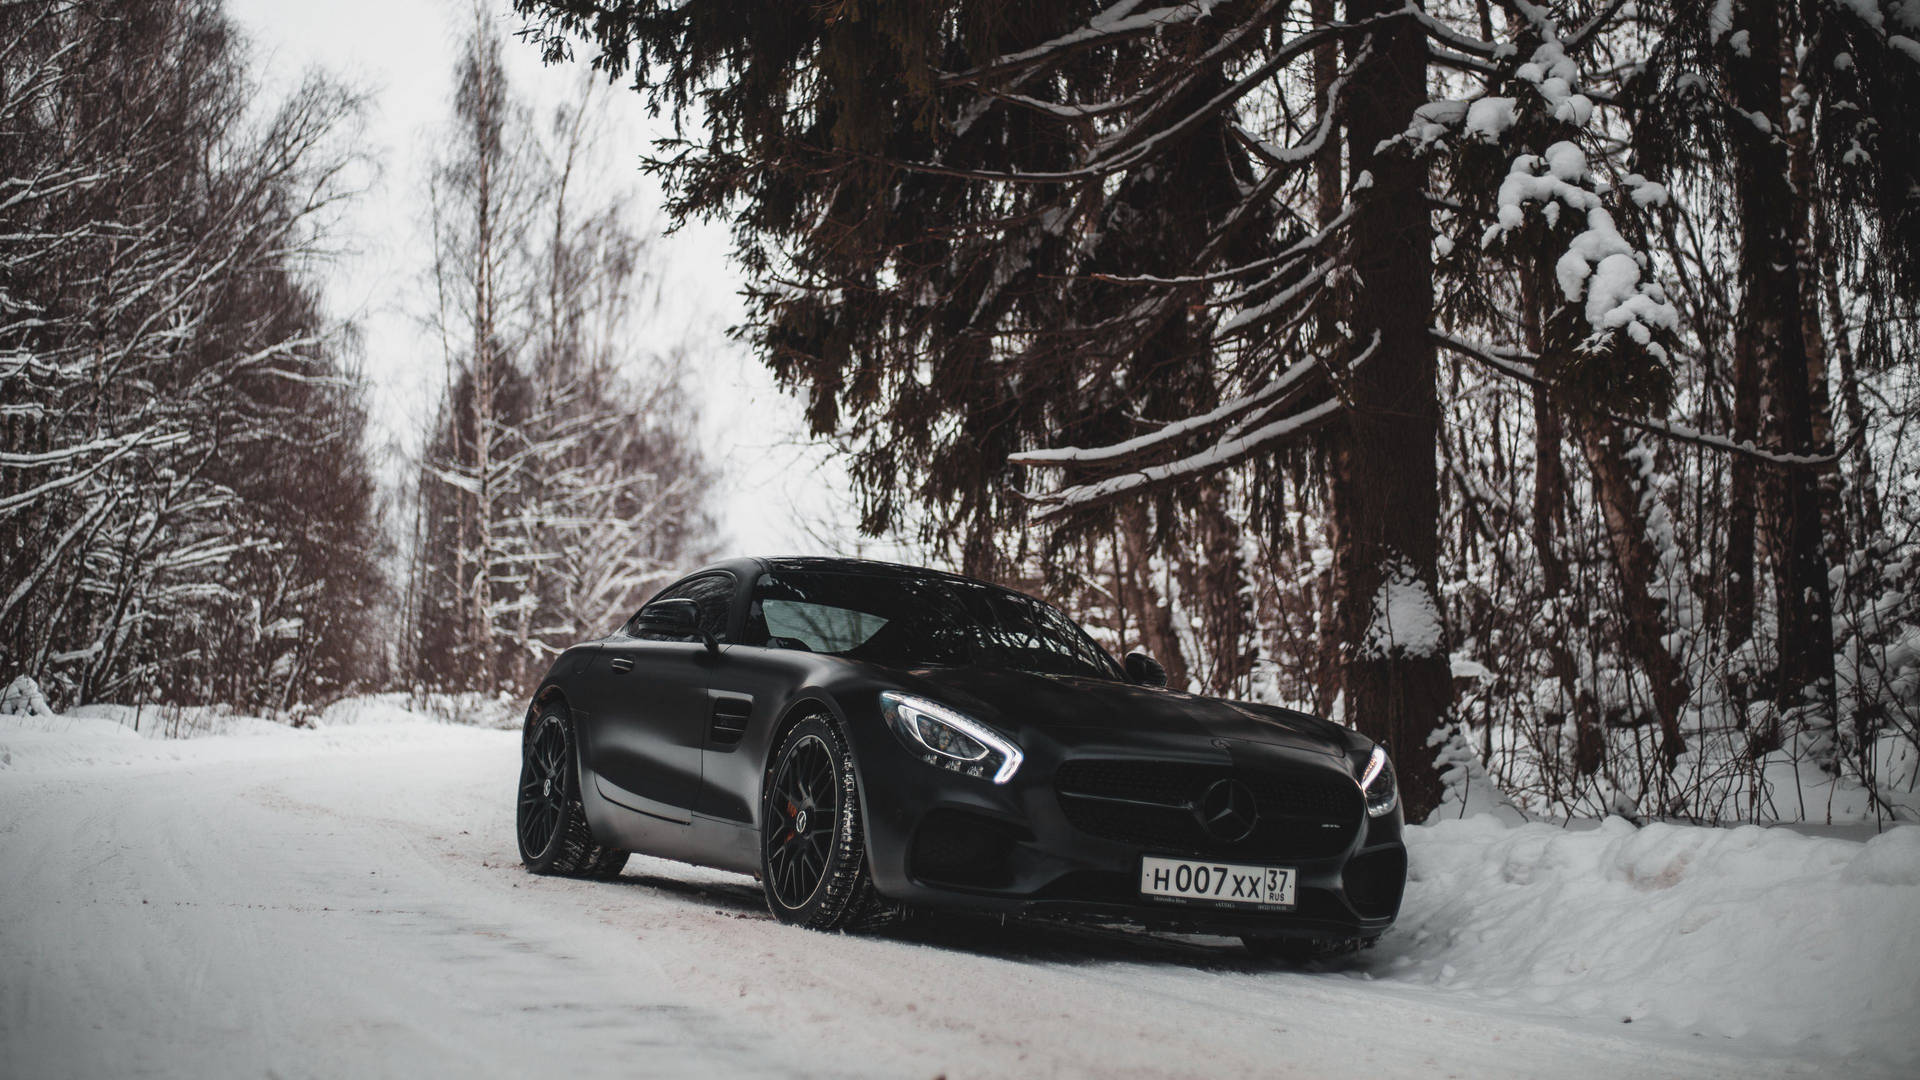 4k Mercedes-benz All Black In Snow Wallpaper